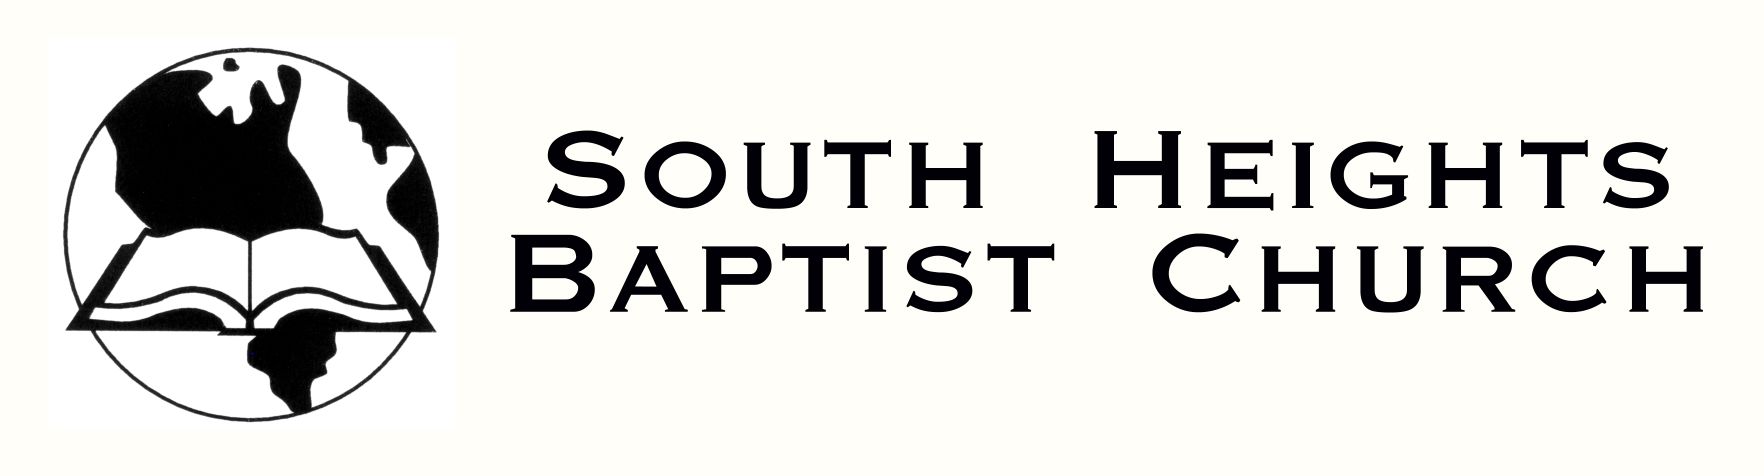 South Heights Baptist Church of Sapulpa